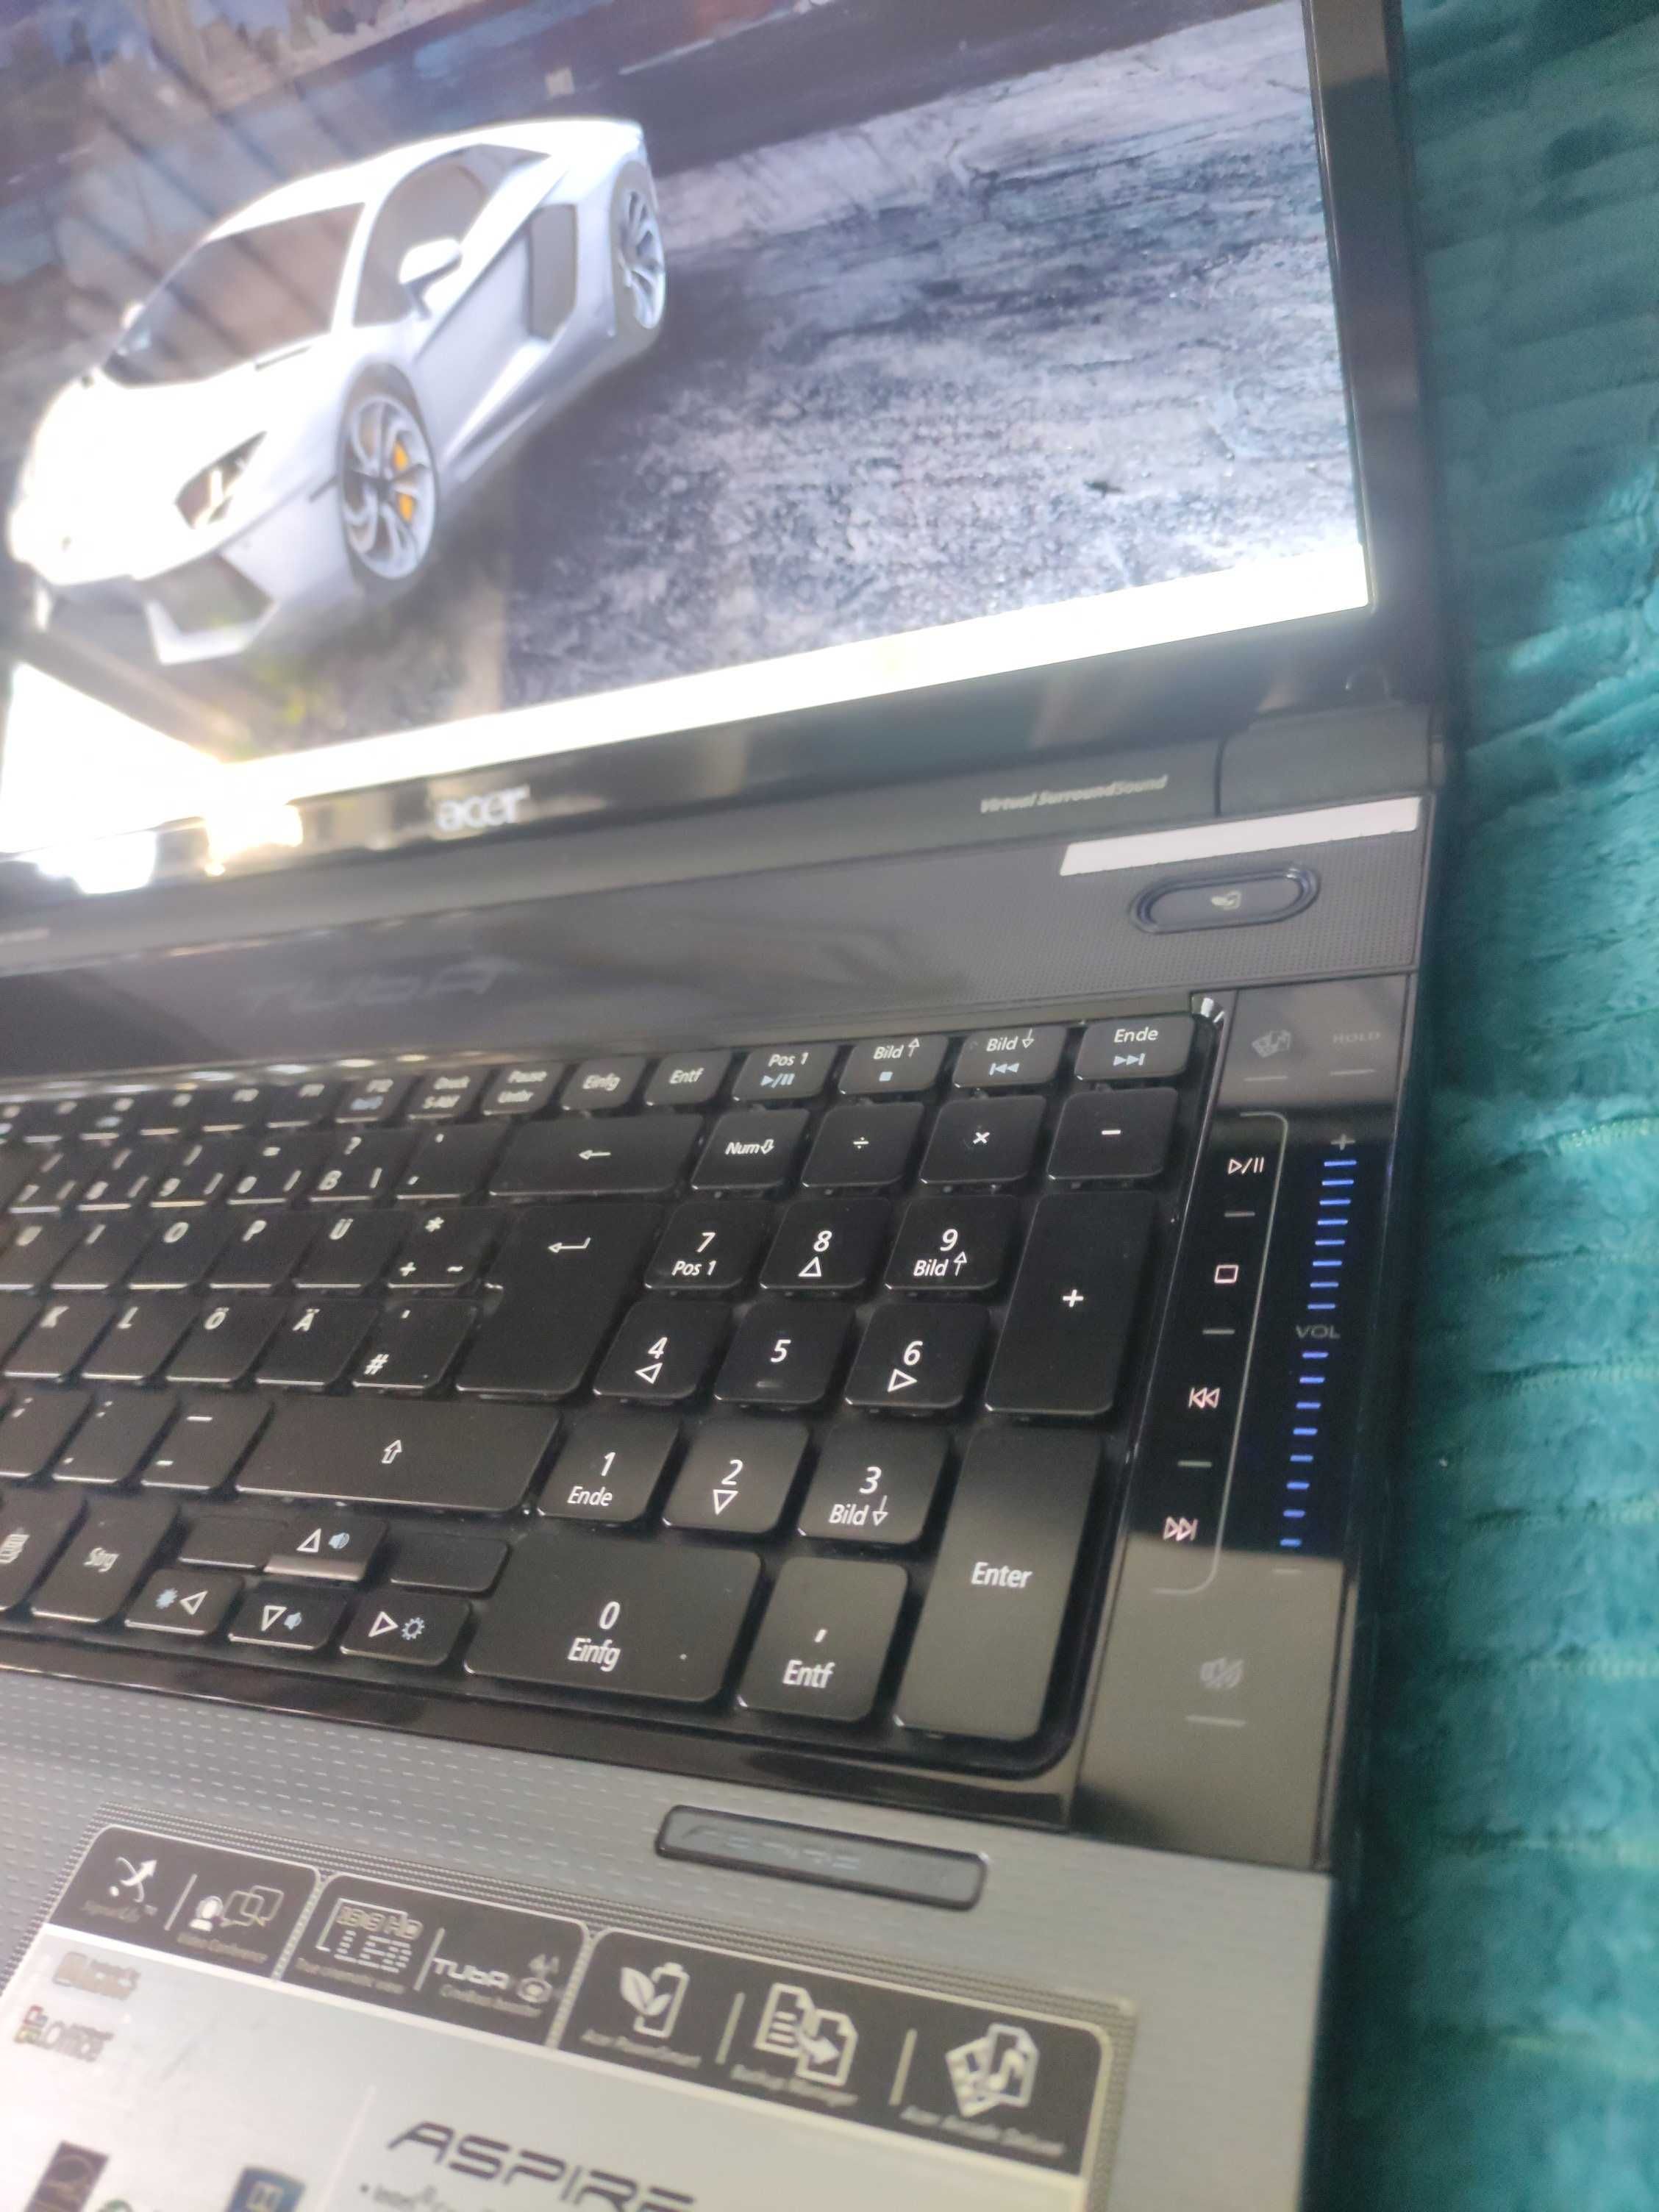 Laptop Acer 7738g Quadcore Q9000 blu-ray SSD+HD retro Nvidia